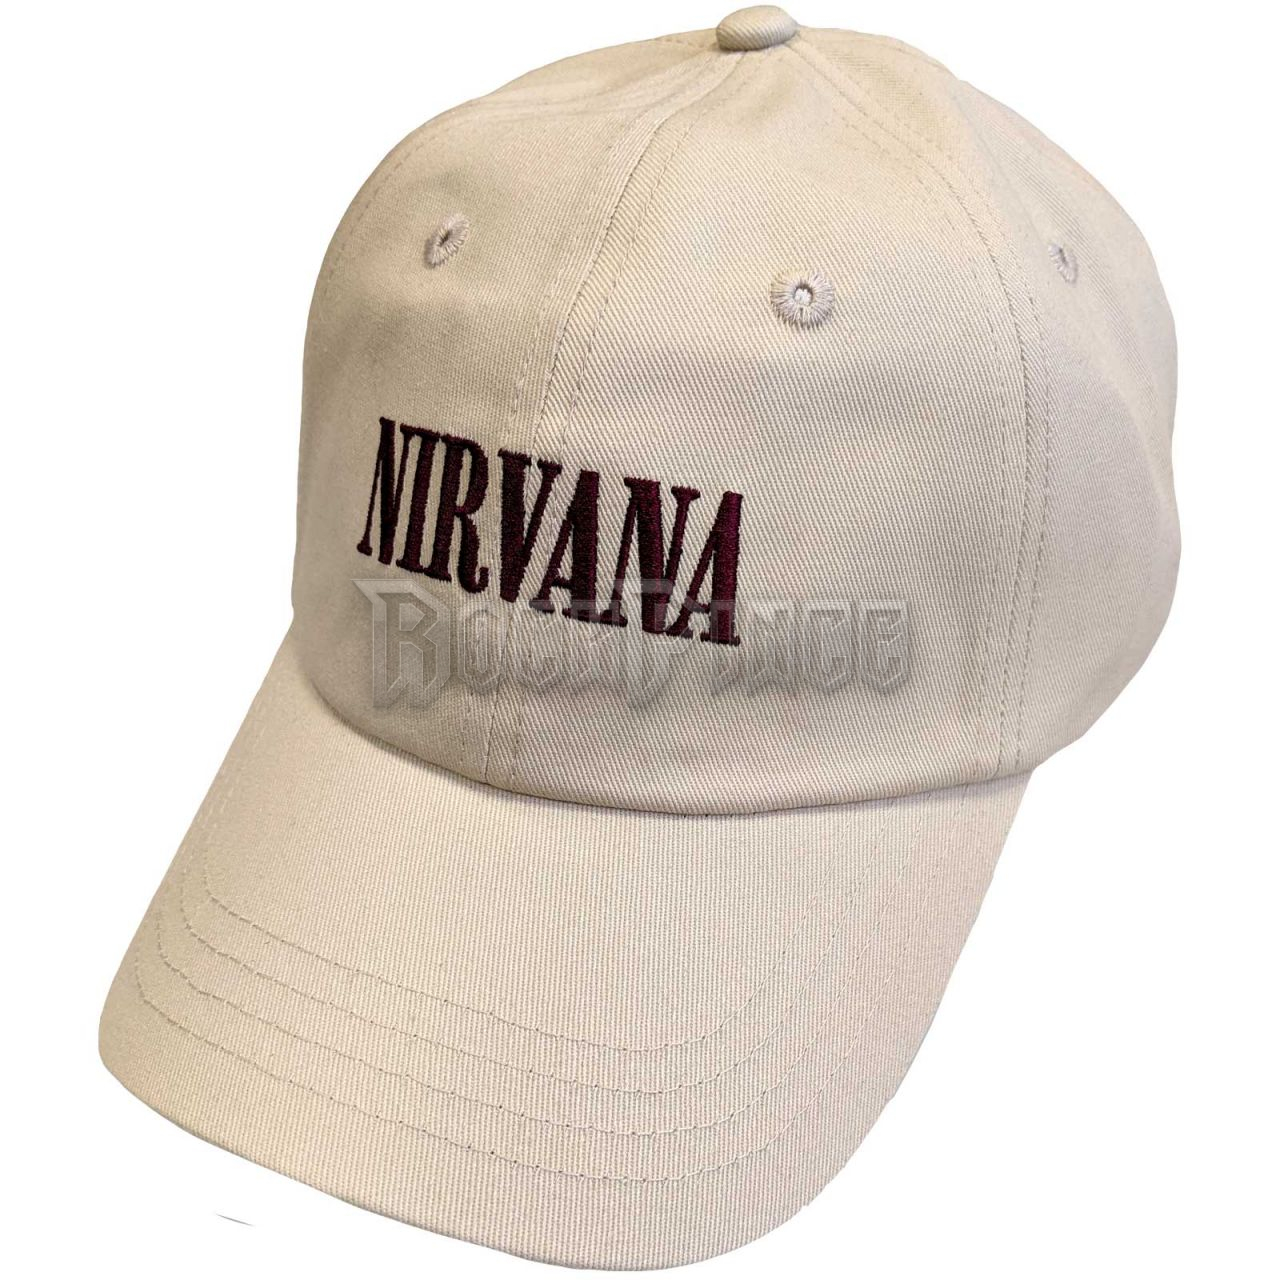 Nirvana - Text Logo in Utero - baseball sapka - NIRVCAP07S